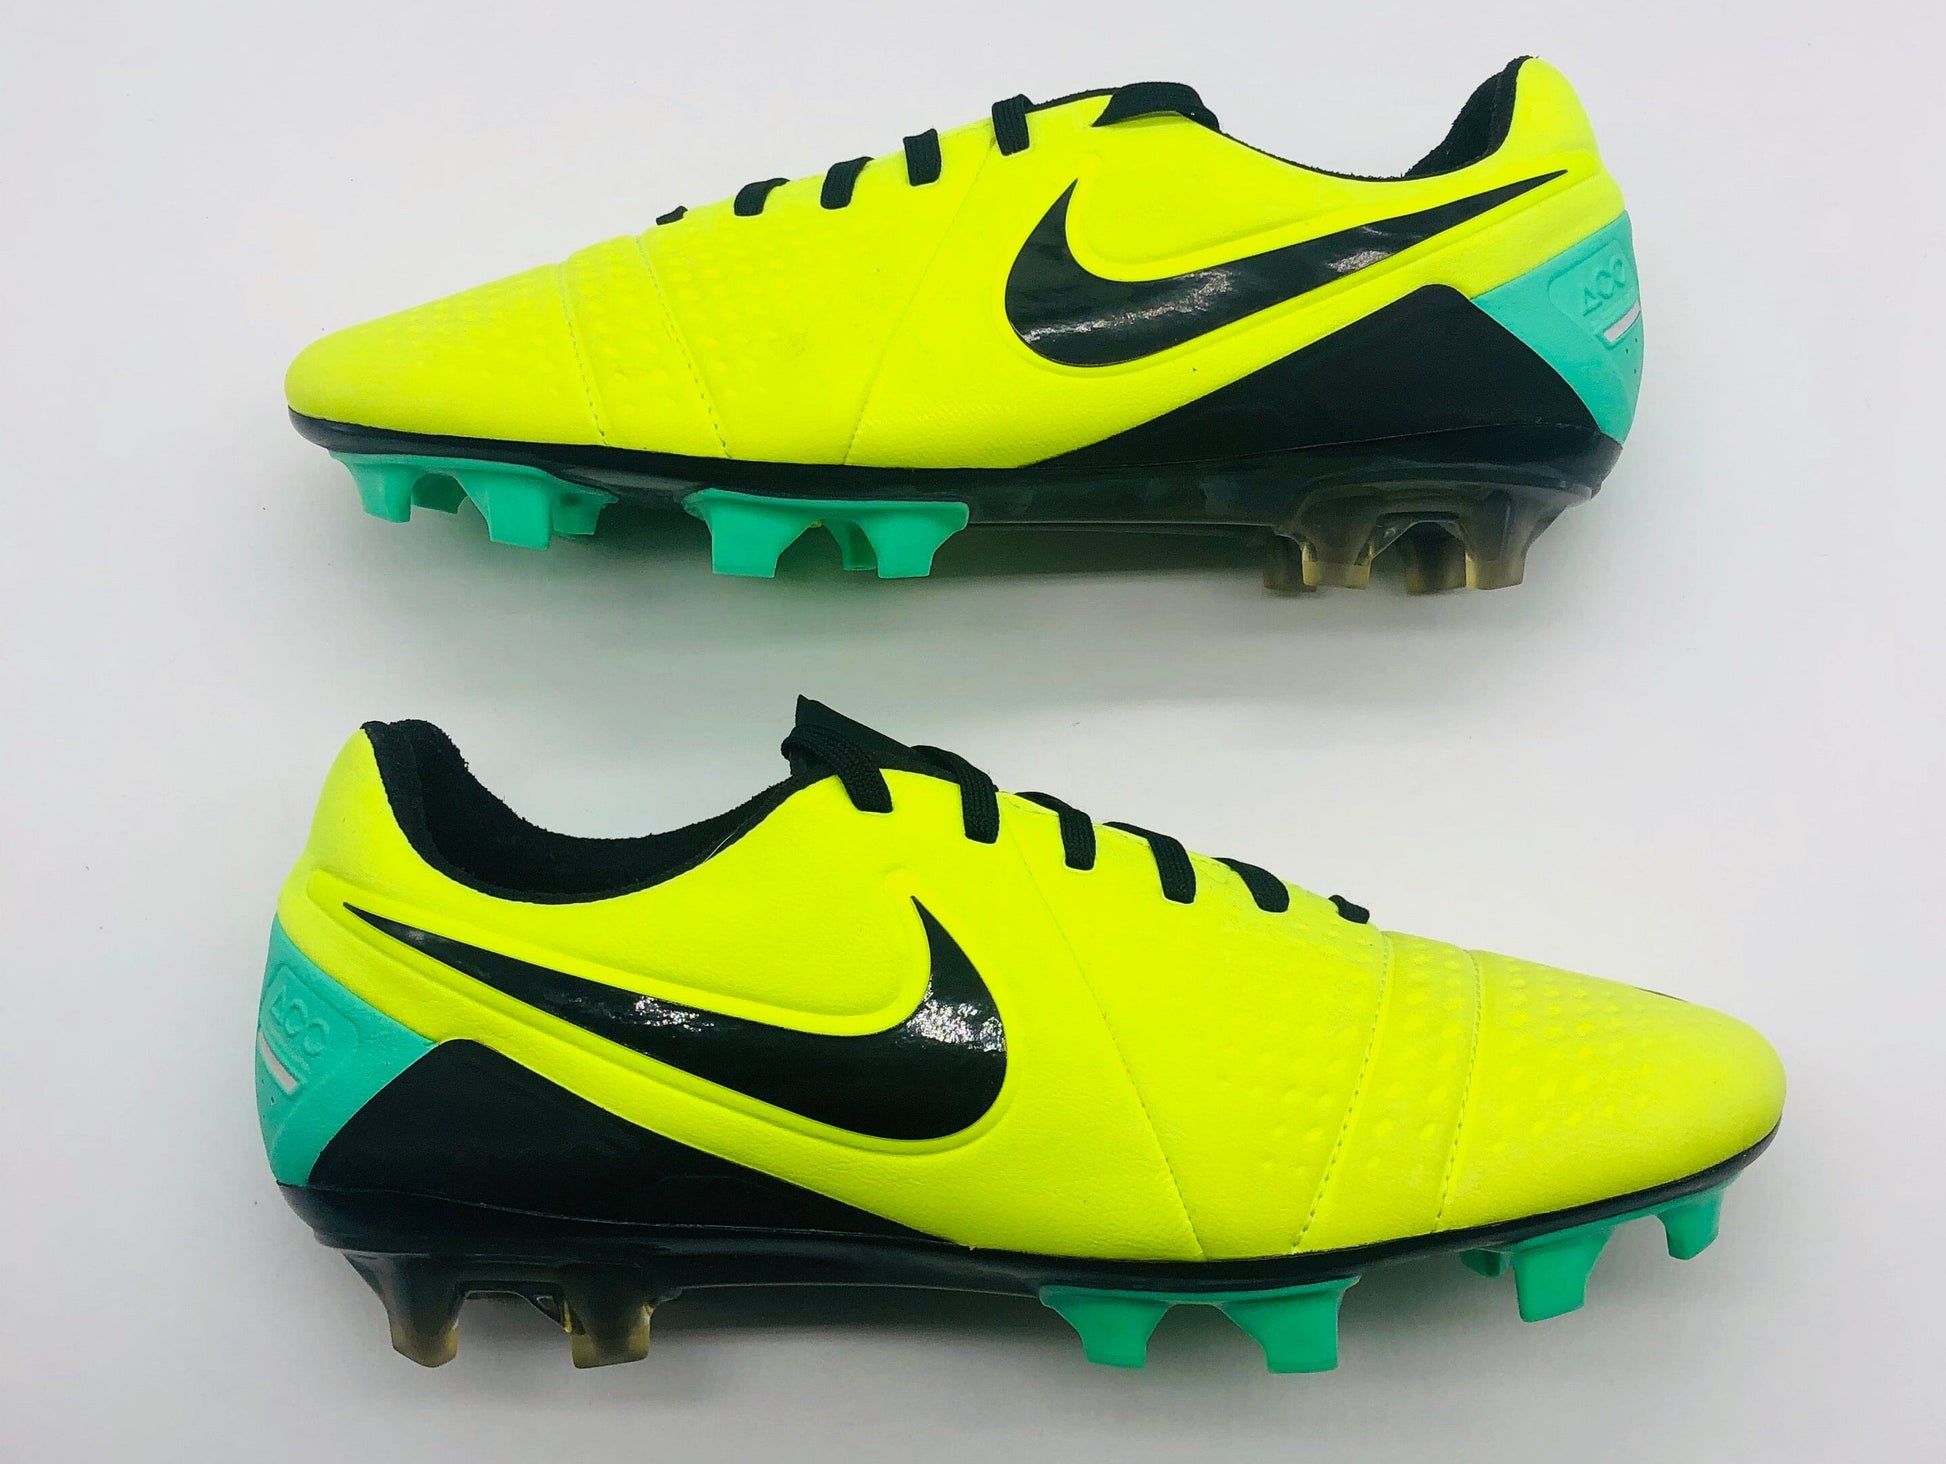 Nike CTR360 Maestri III FG Football Boots Ltd